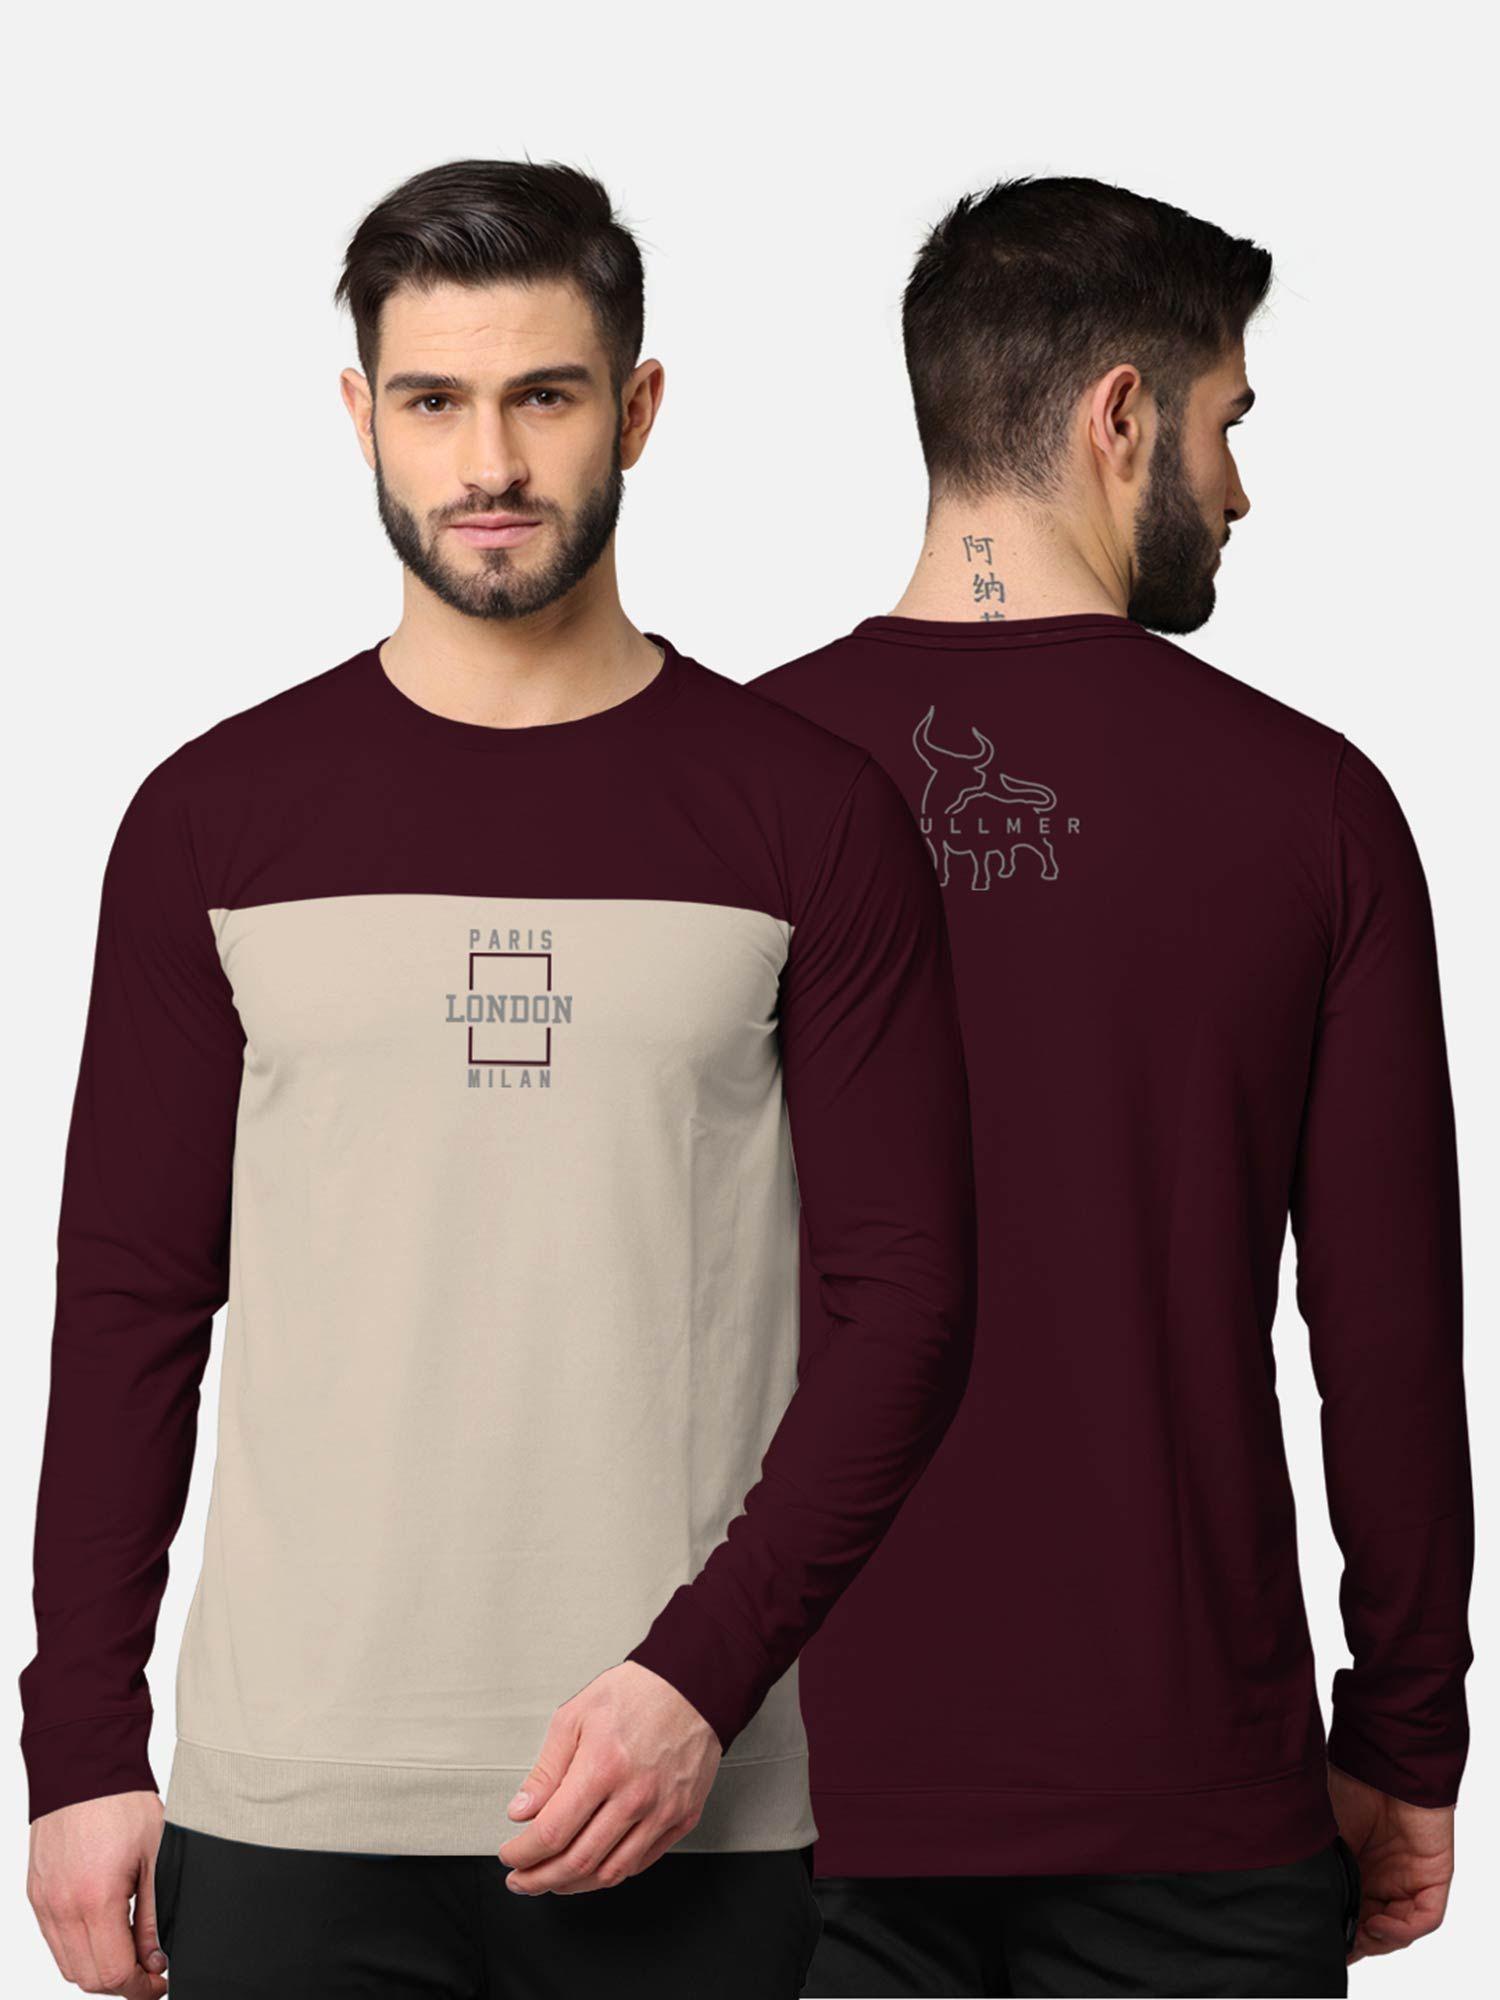 trendy-front-&-back-colorblock-full-sleeve-t-shirt-for-men-burgundy-and-beige